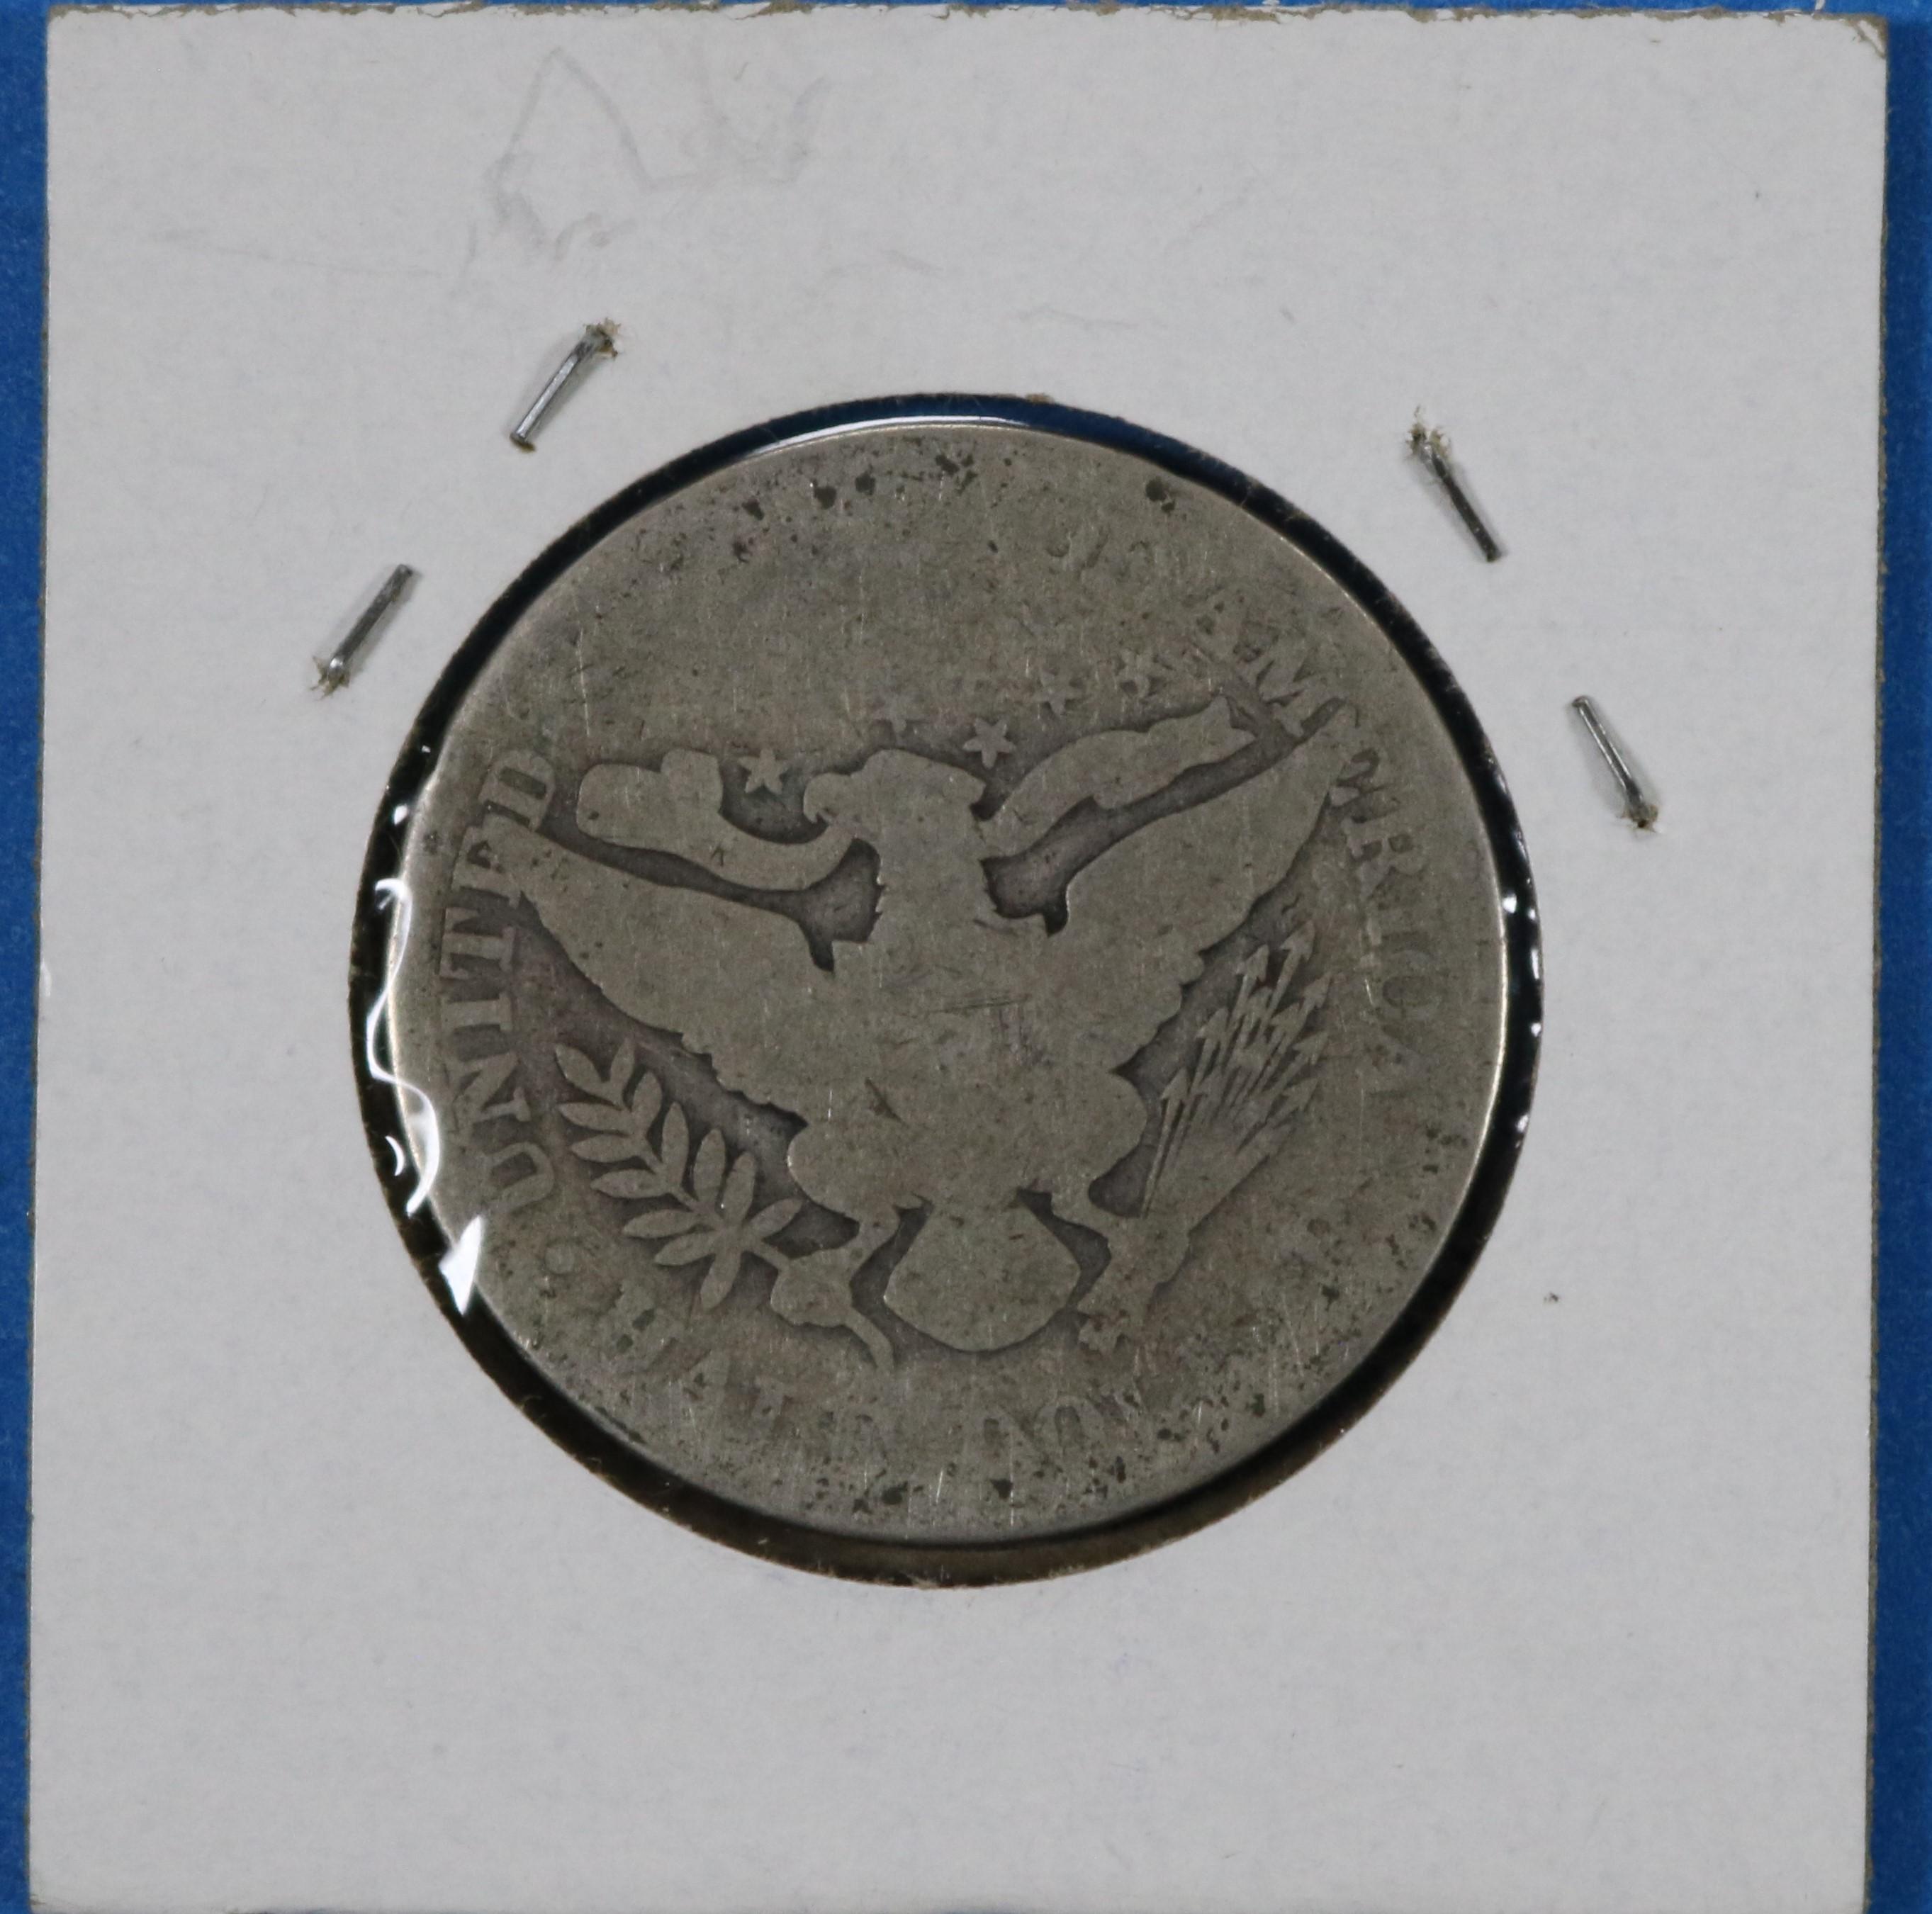 1900-O Barber Half Dollar Silver Coin